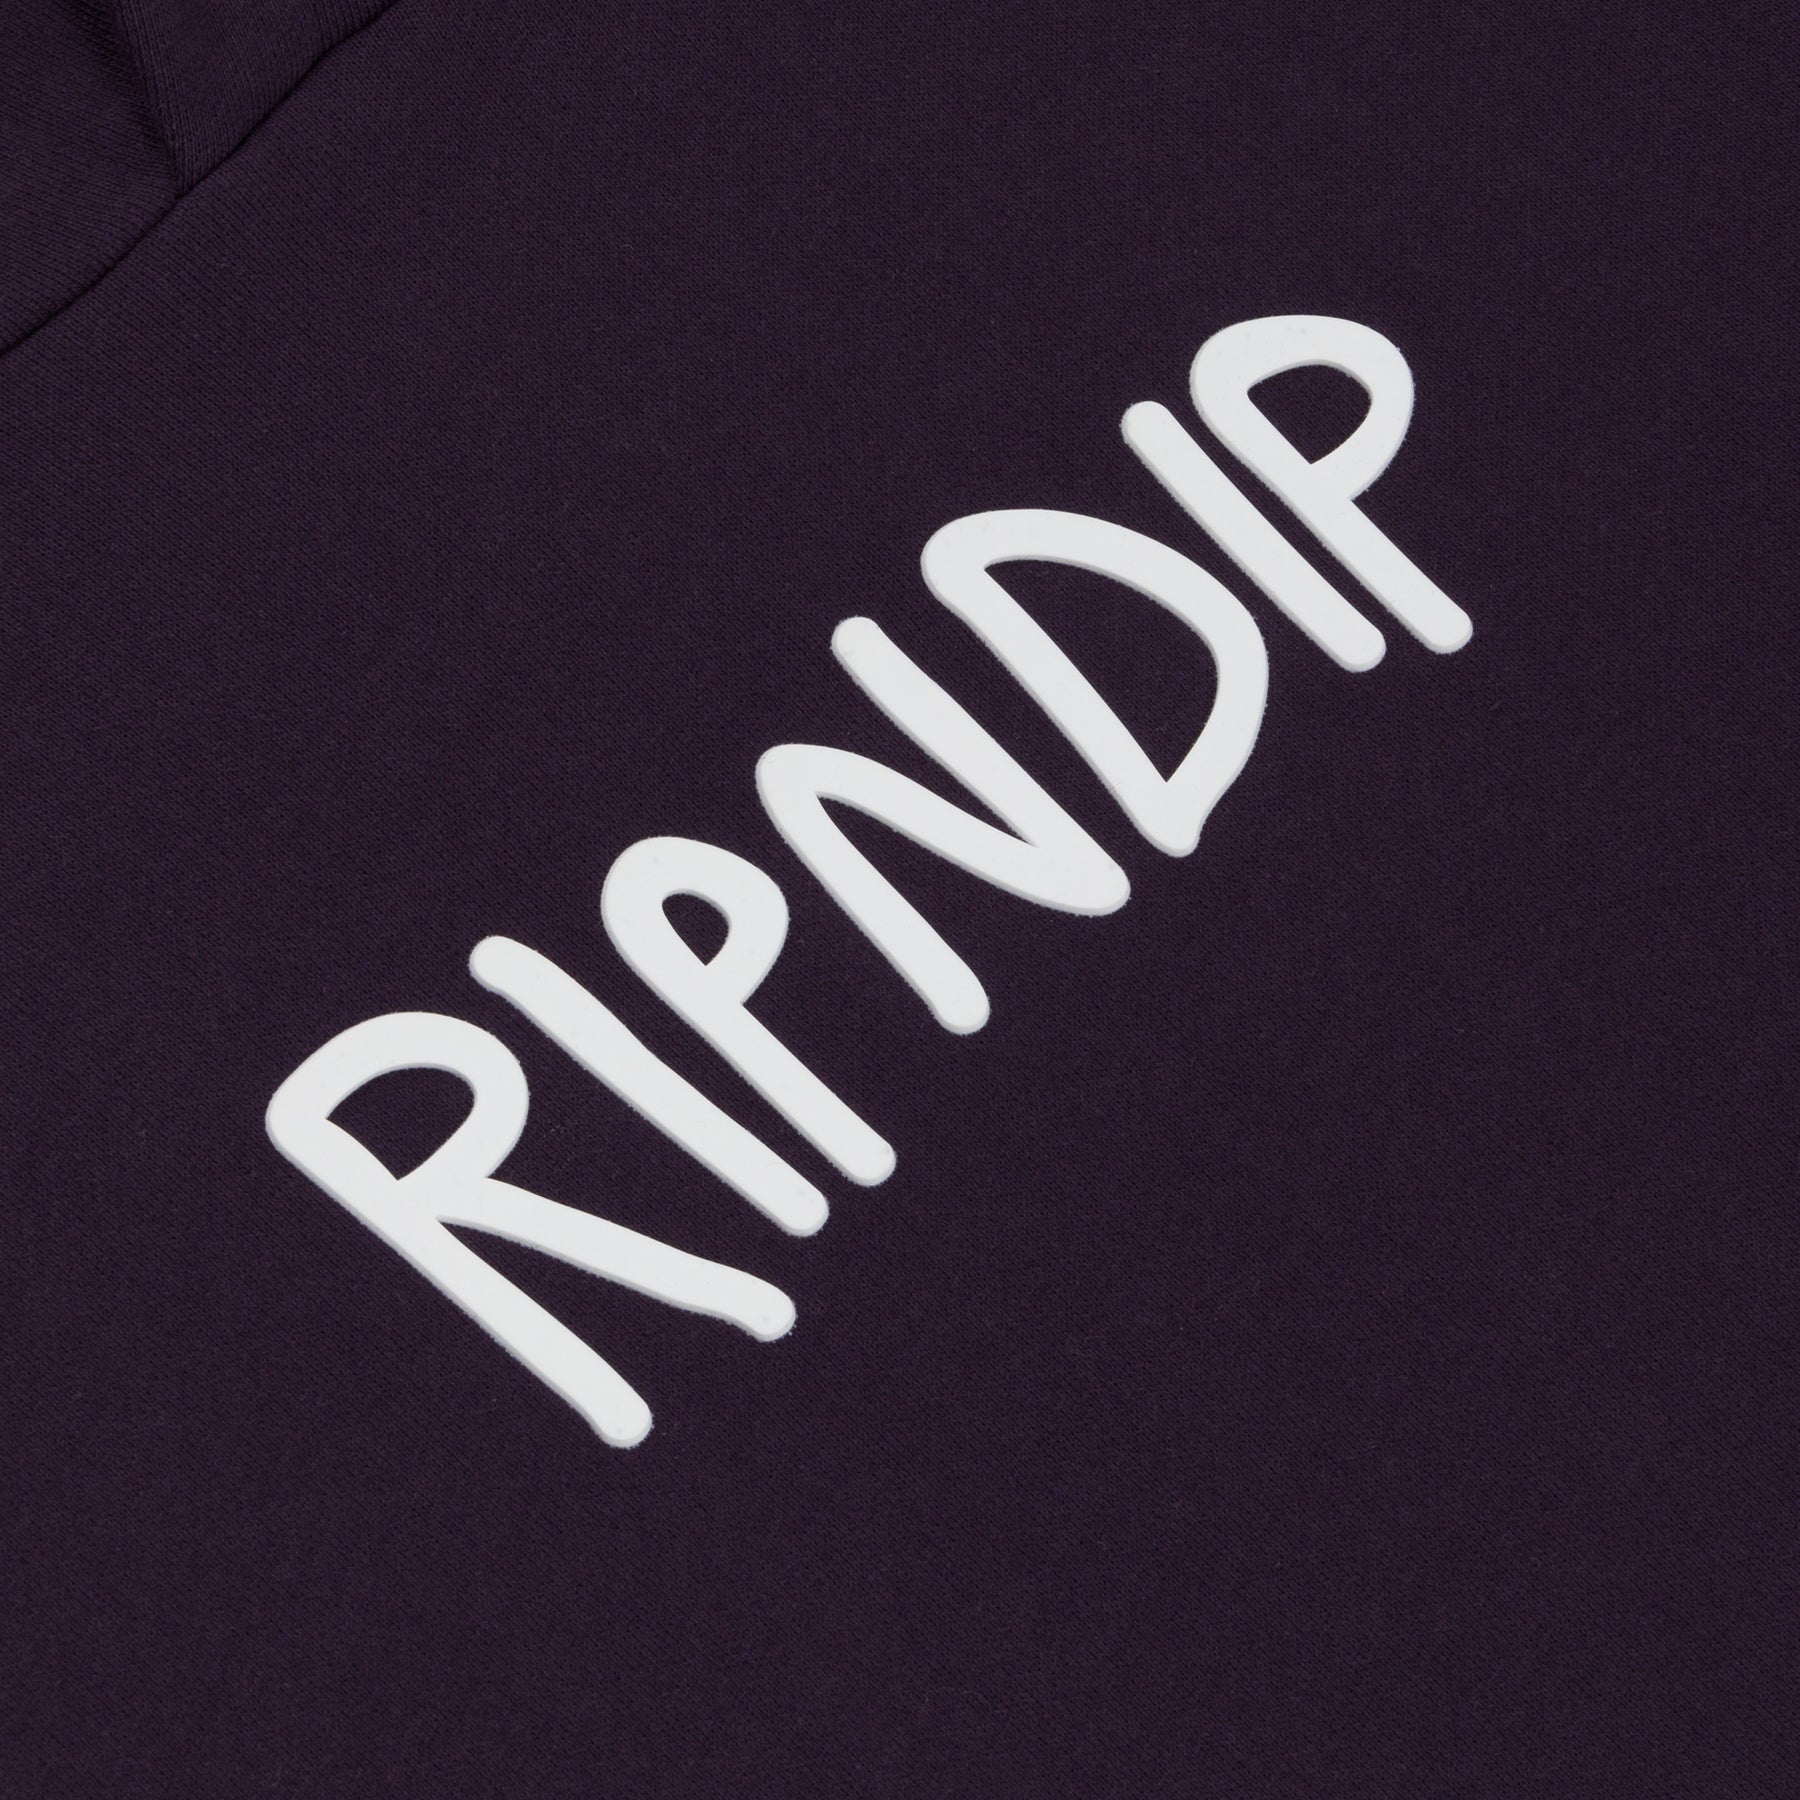 RIPNDIP Rubber Logo Hoodie (Dark Purple)